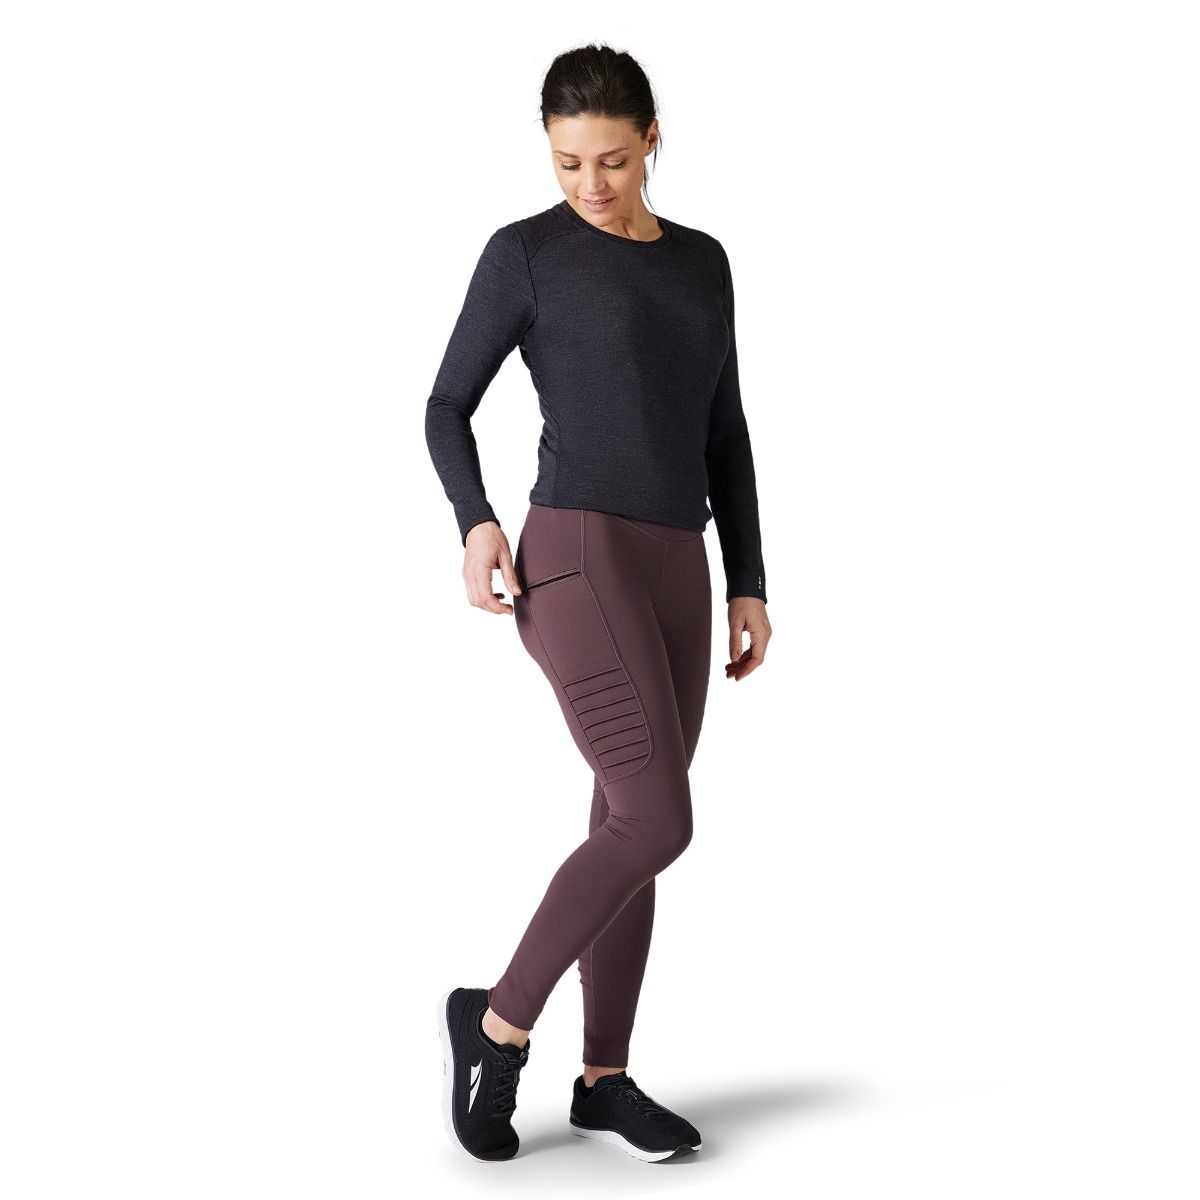 Smartwool 100% Merino Wool Stripes Multi Color Gray Leggings Size XS - 54%  off